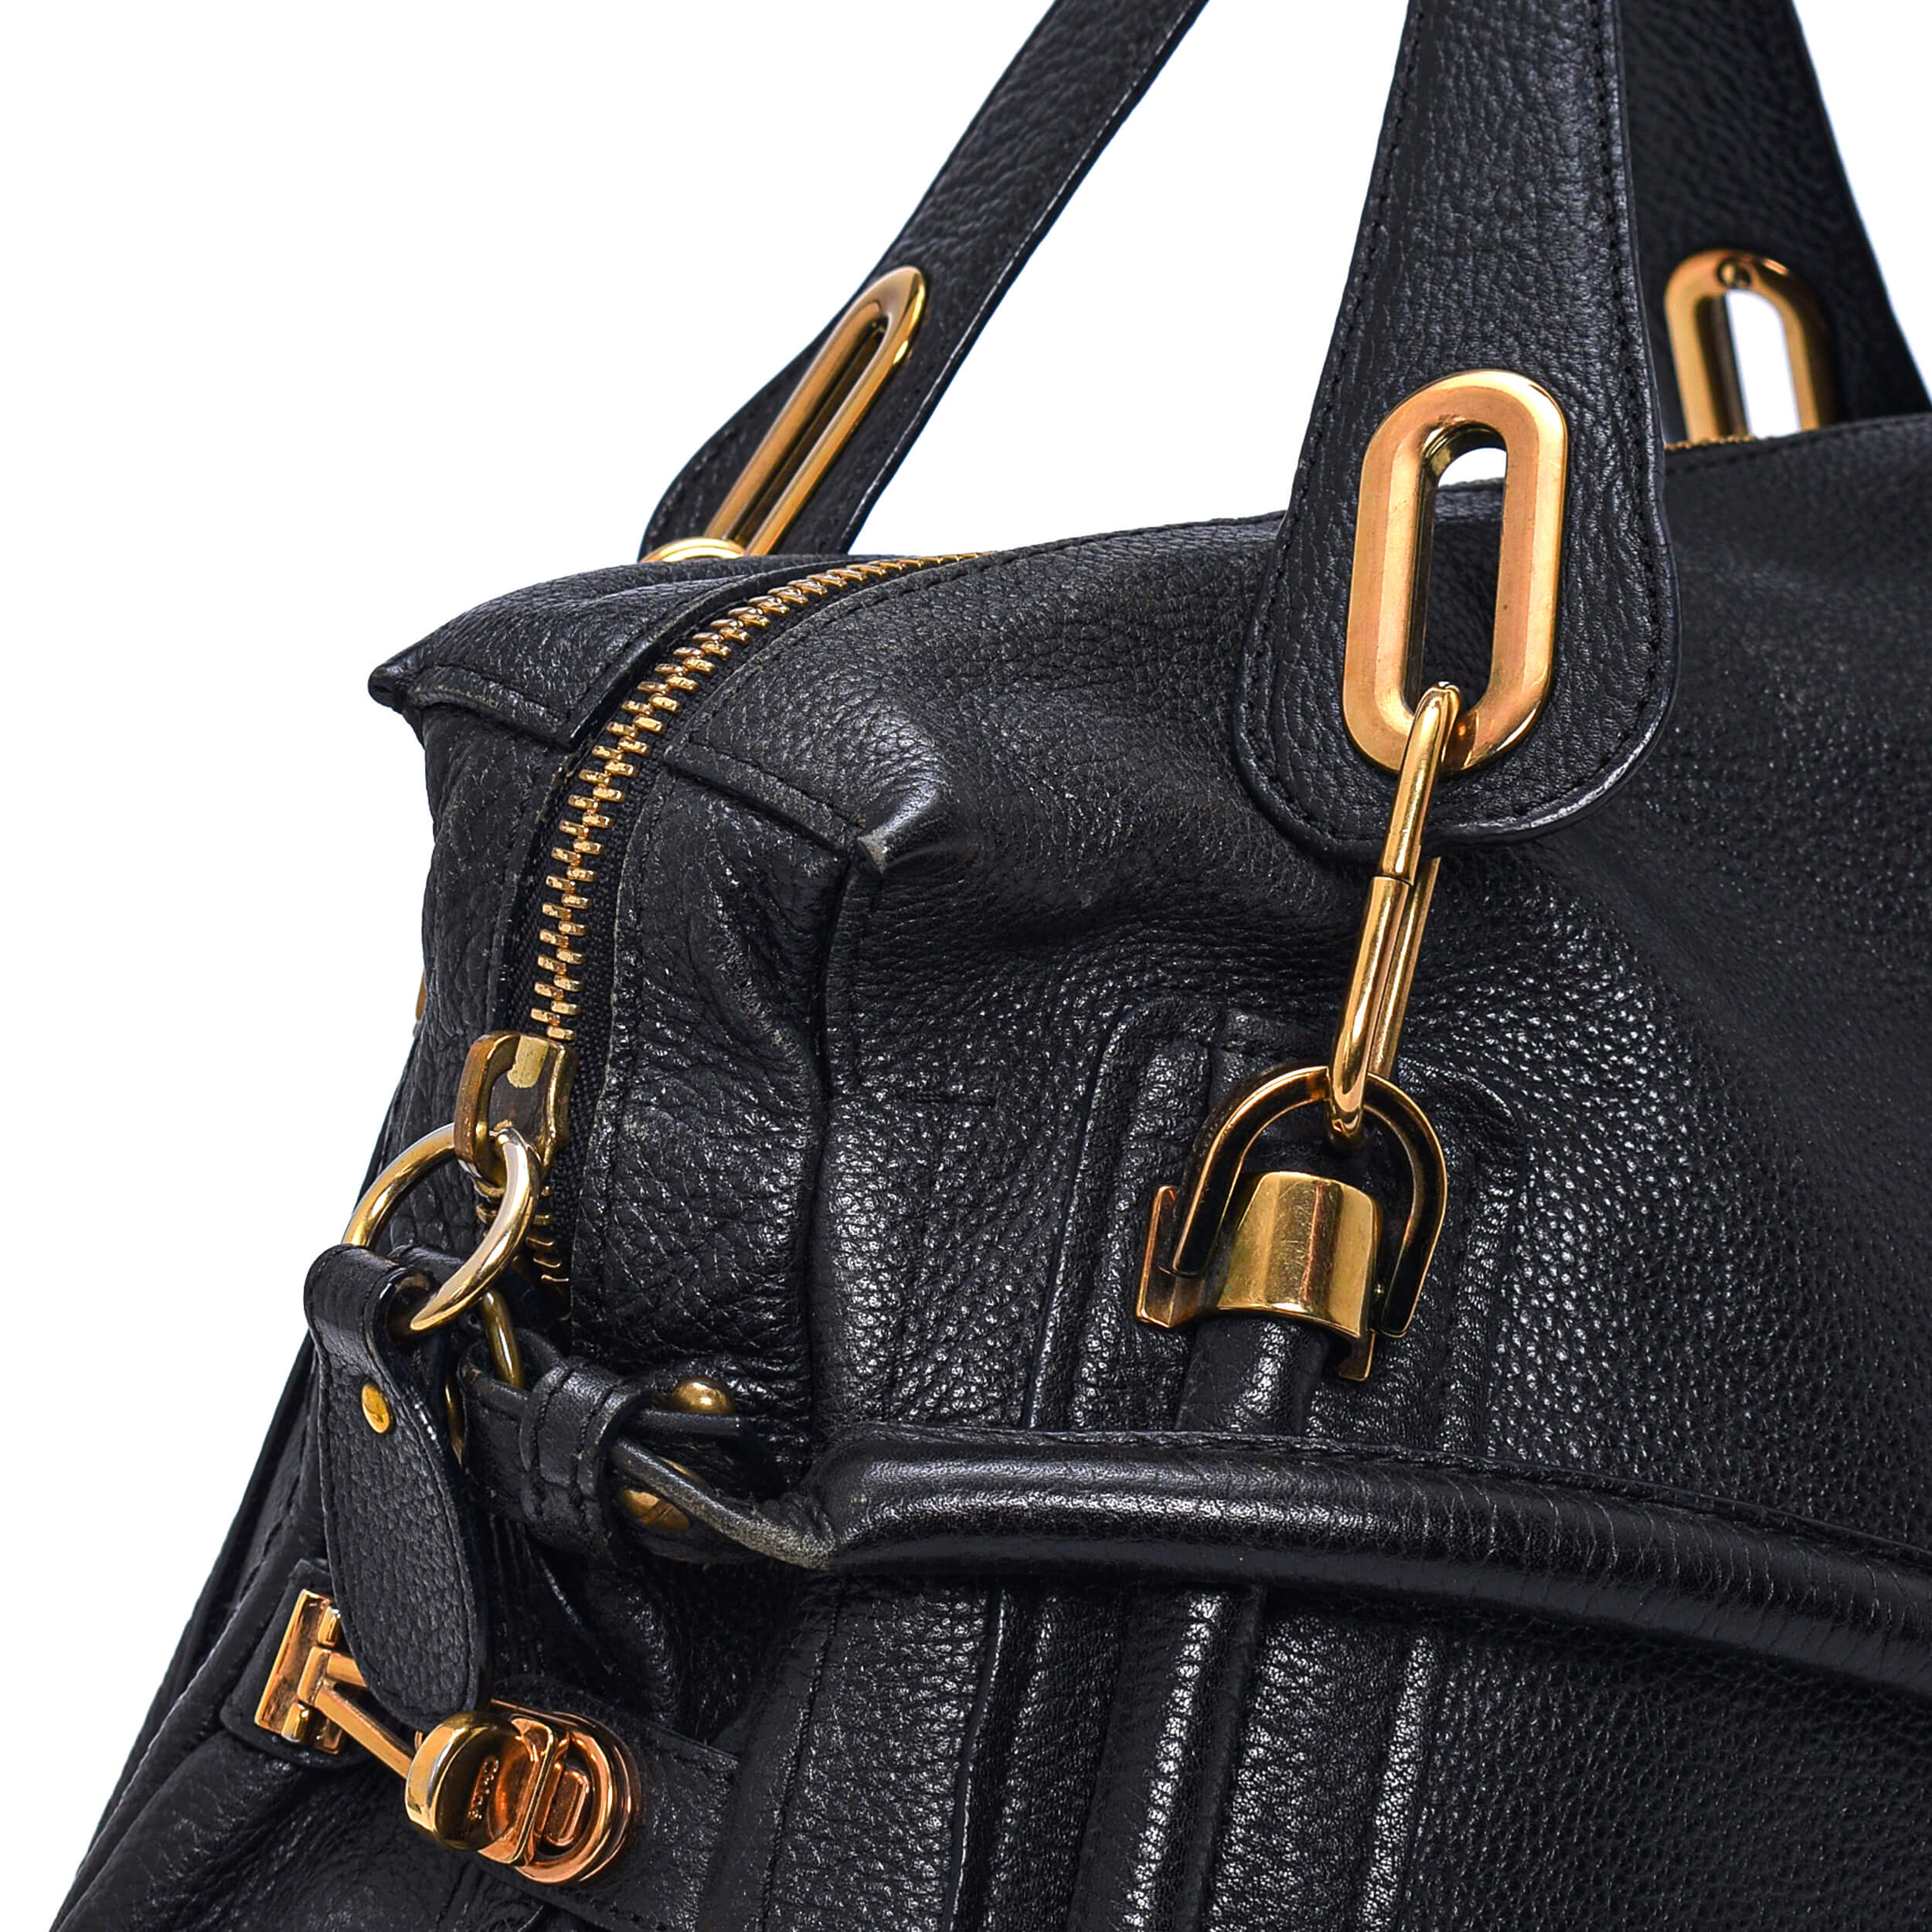 Chloe - Black Leather Large Paraty Satchel Bag